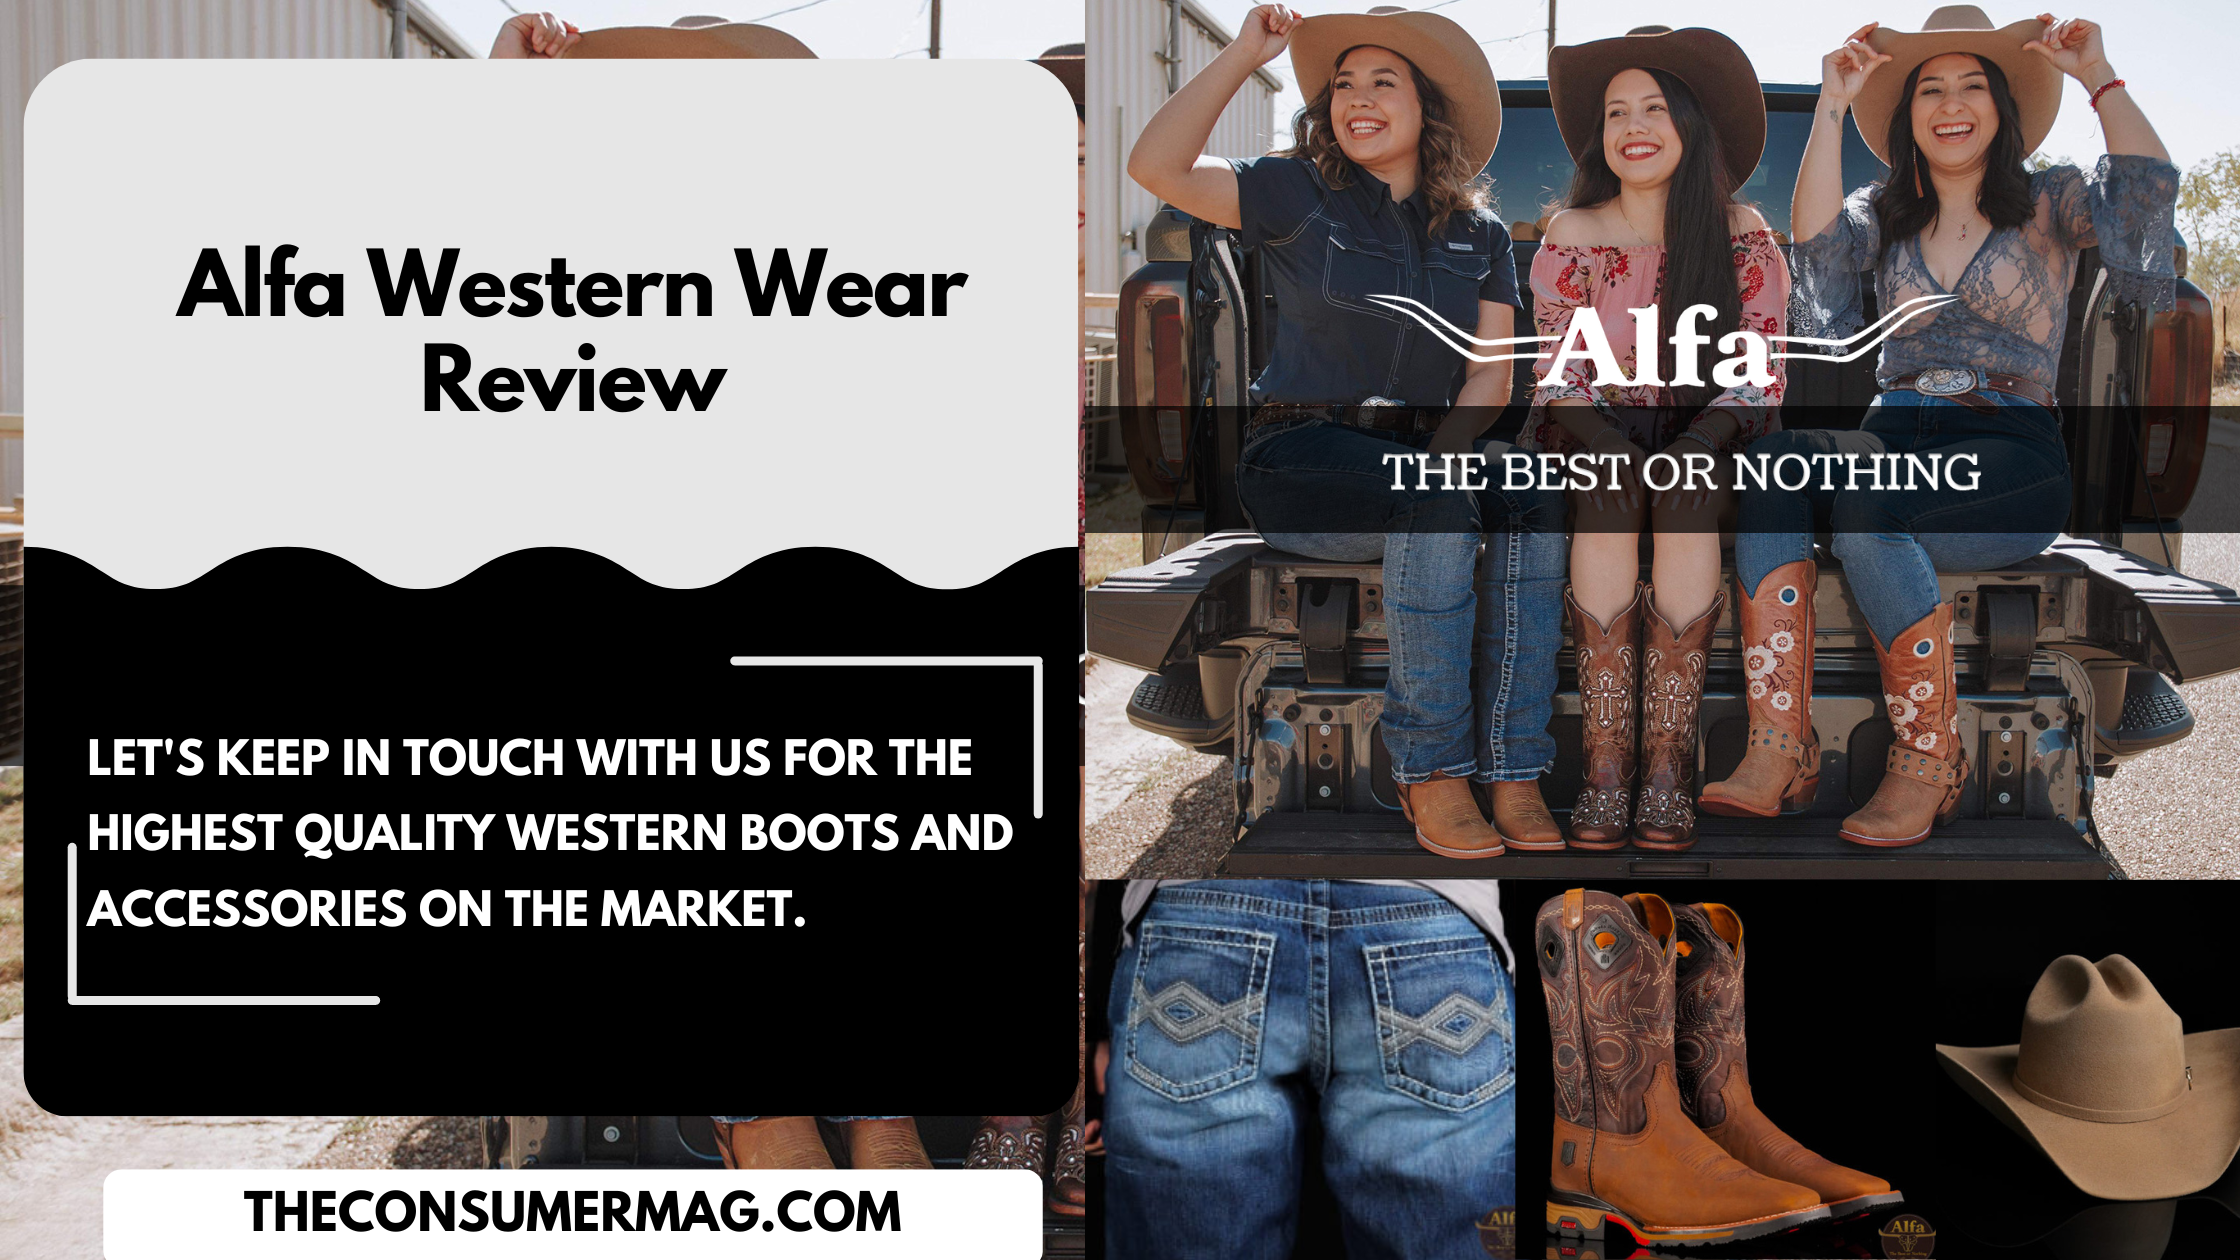 Alfa western wear featured image